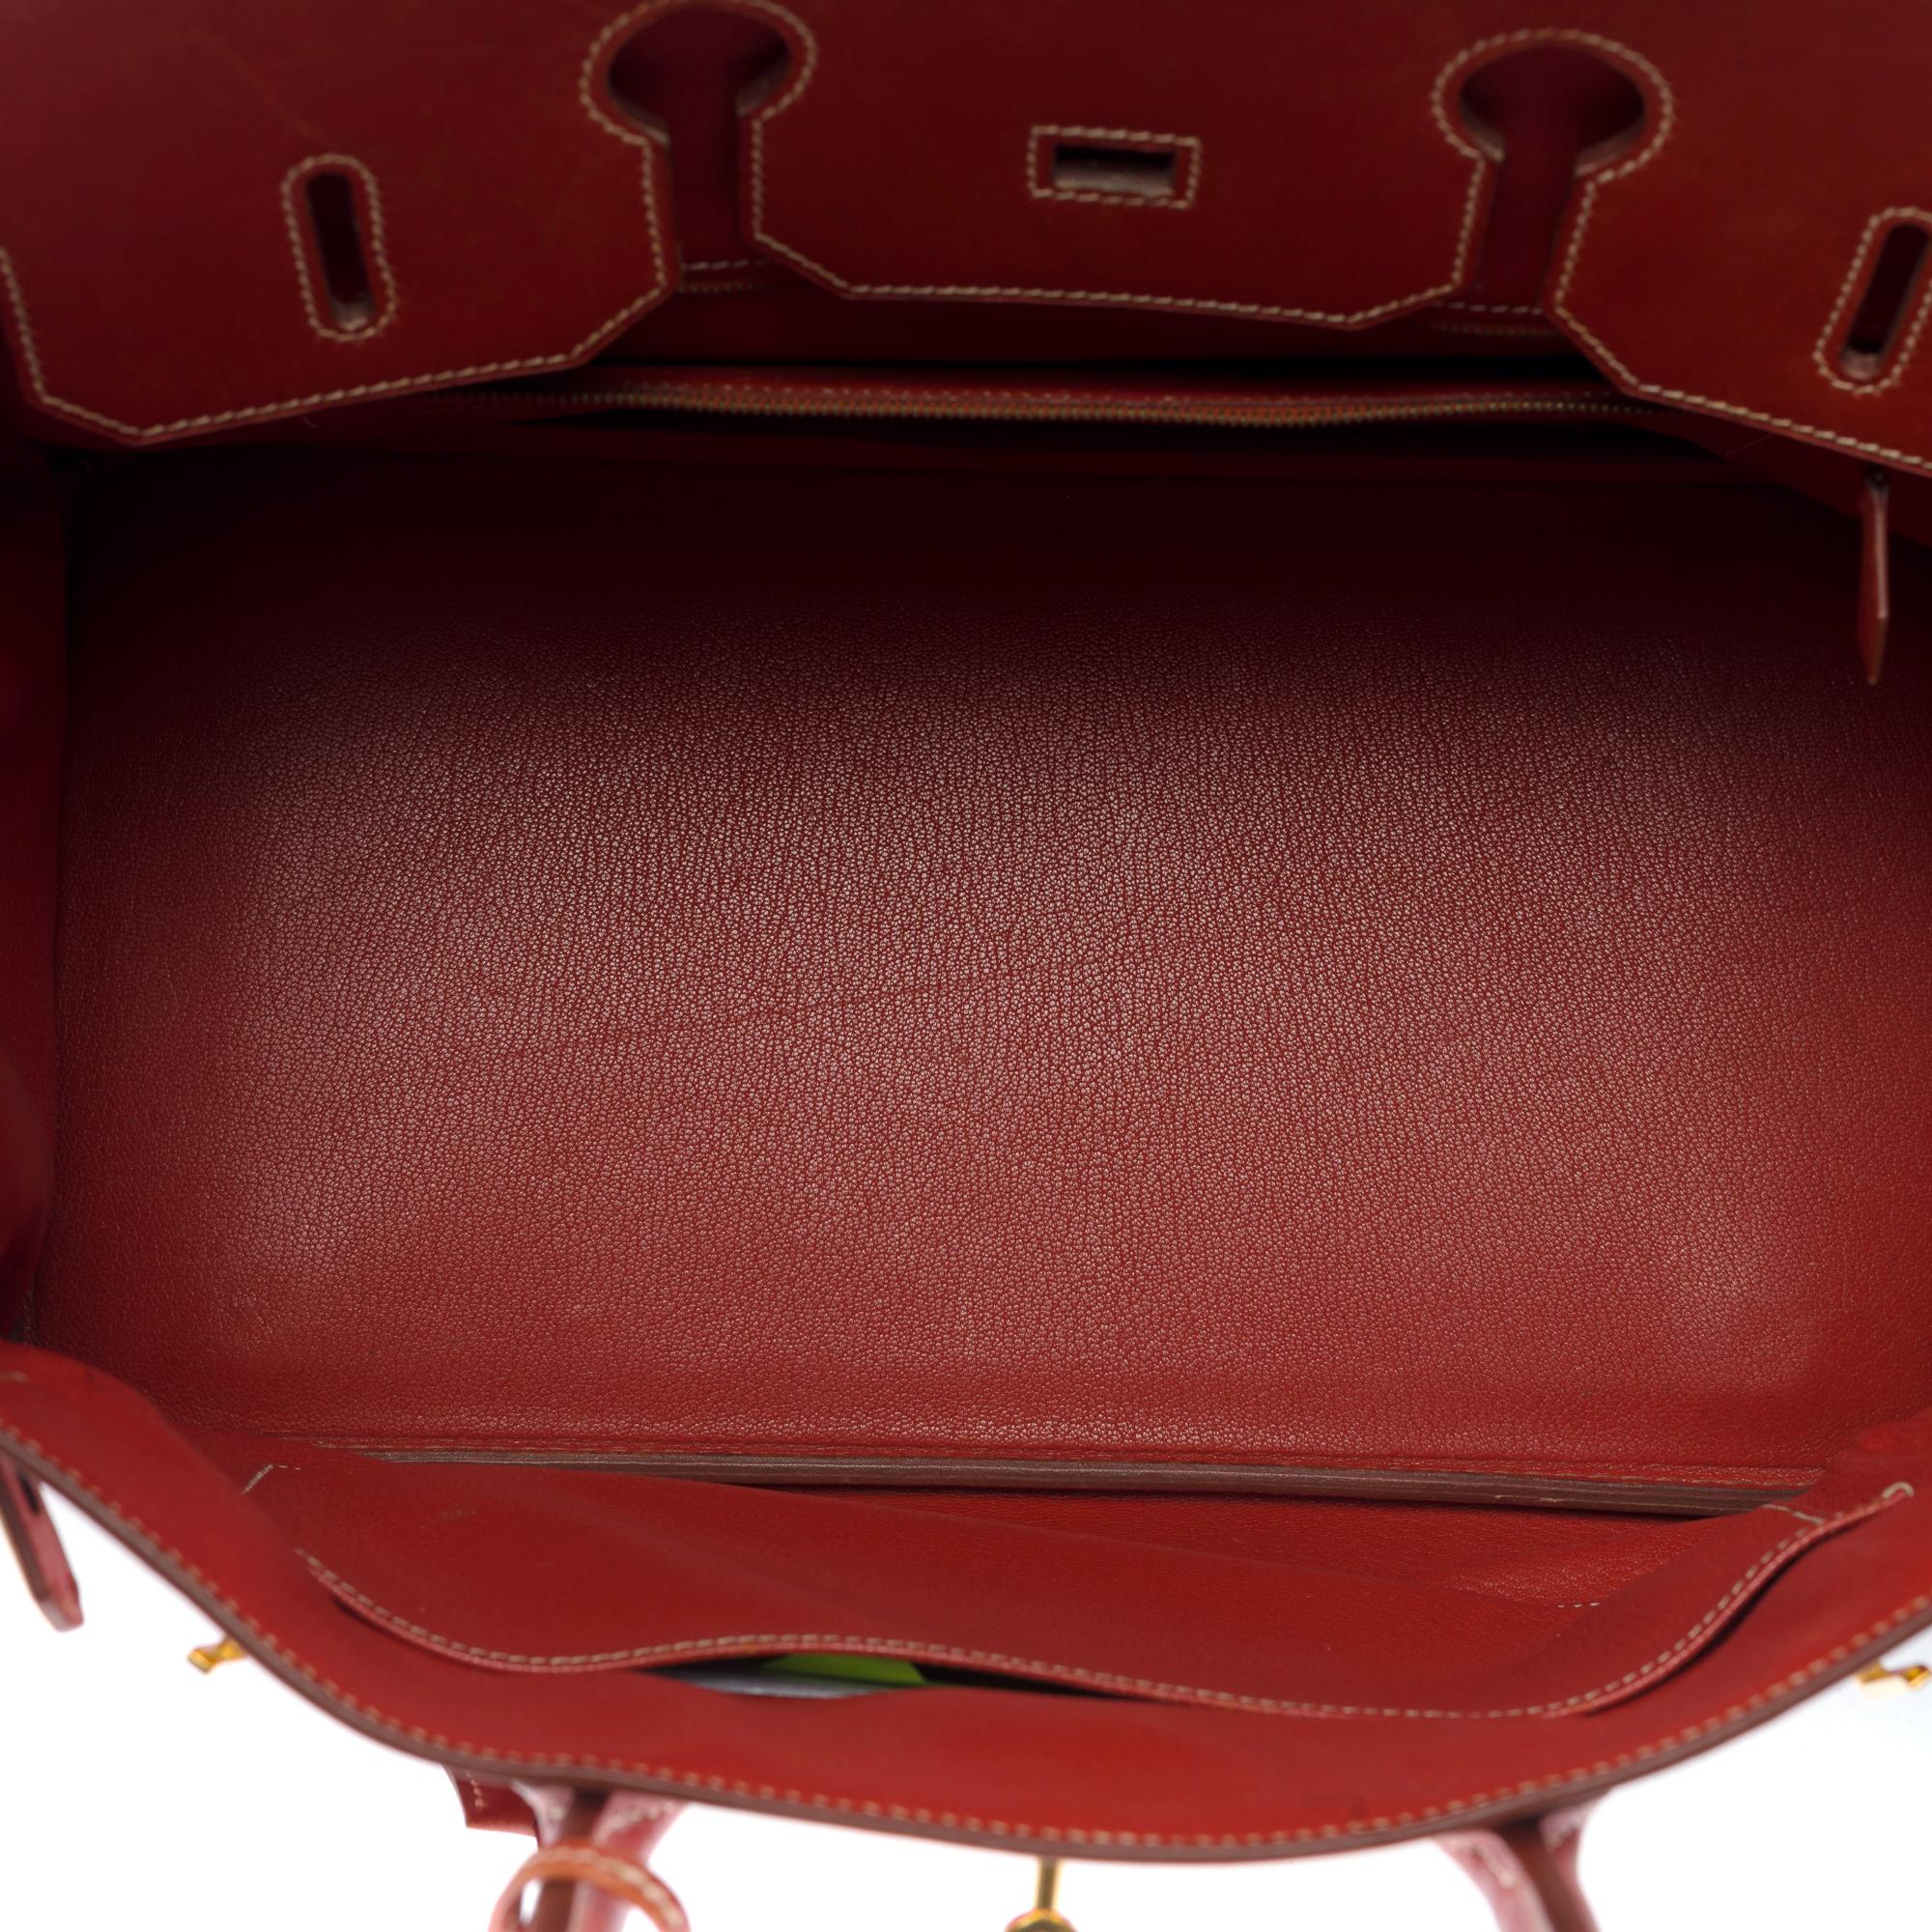 Amazing & Rare Hermès Birkin 35 handbag in Cognac box calfskin leather, GHW 3